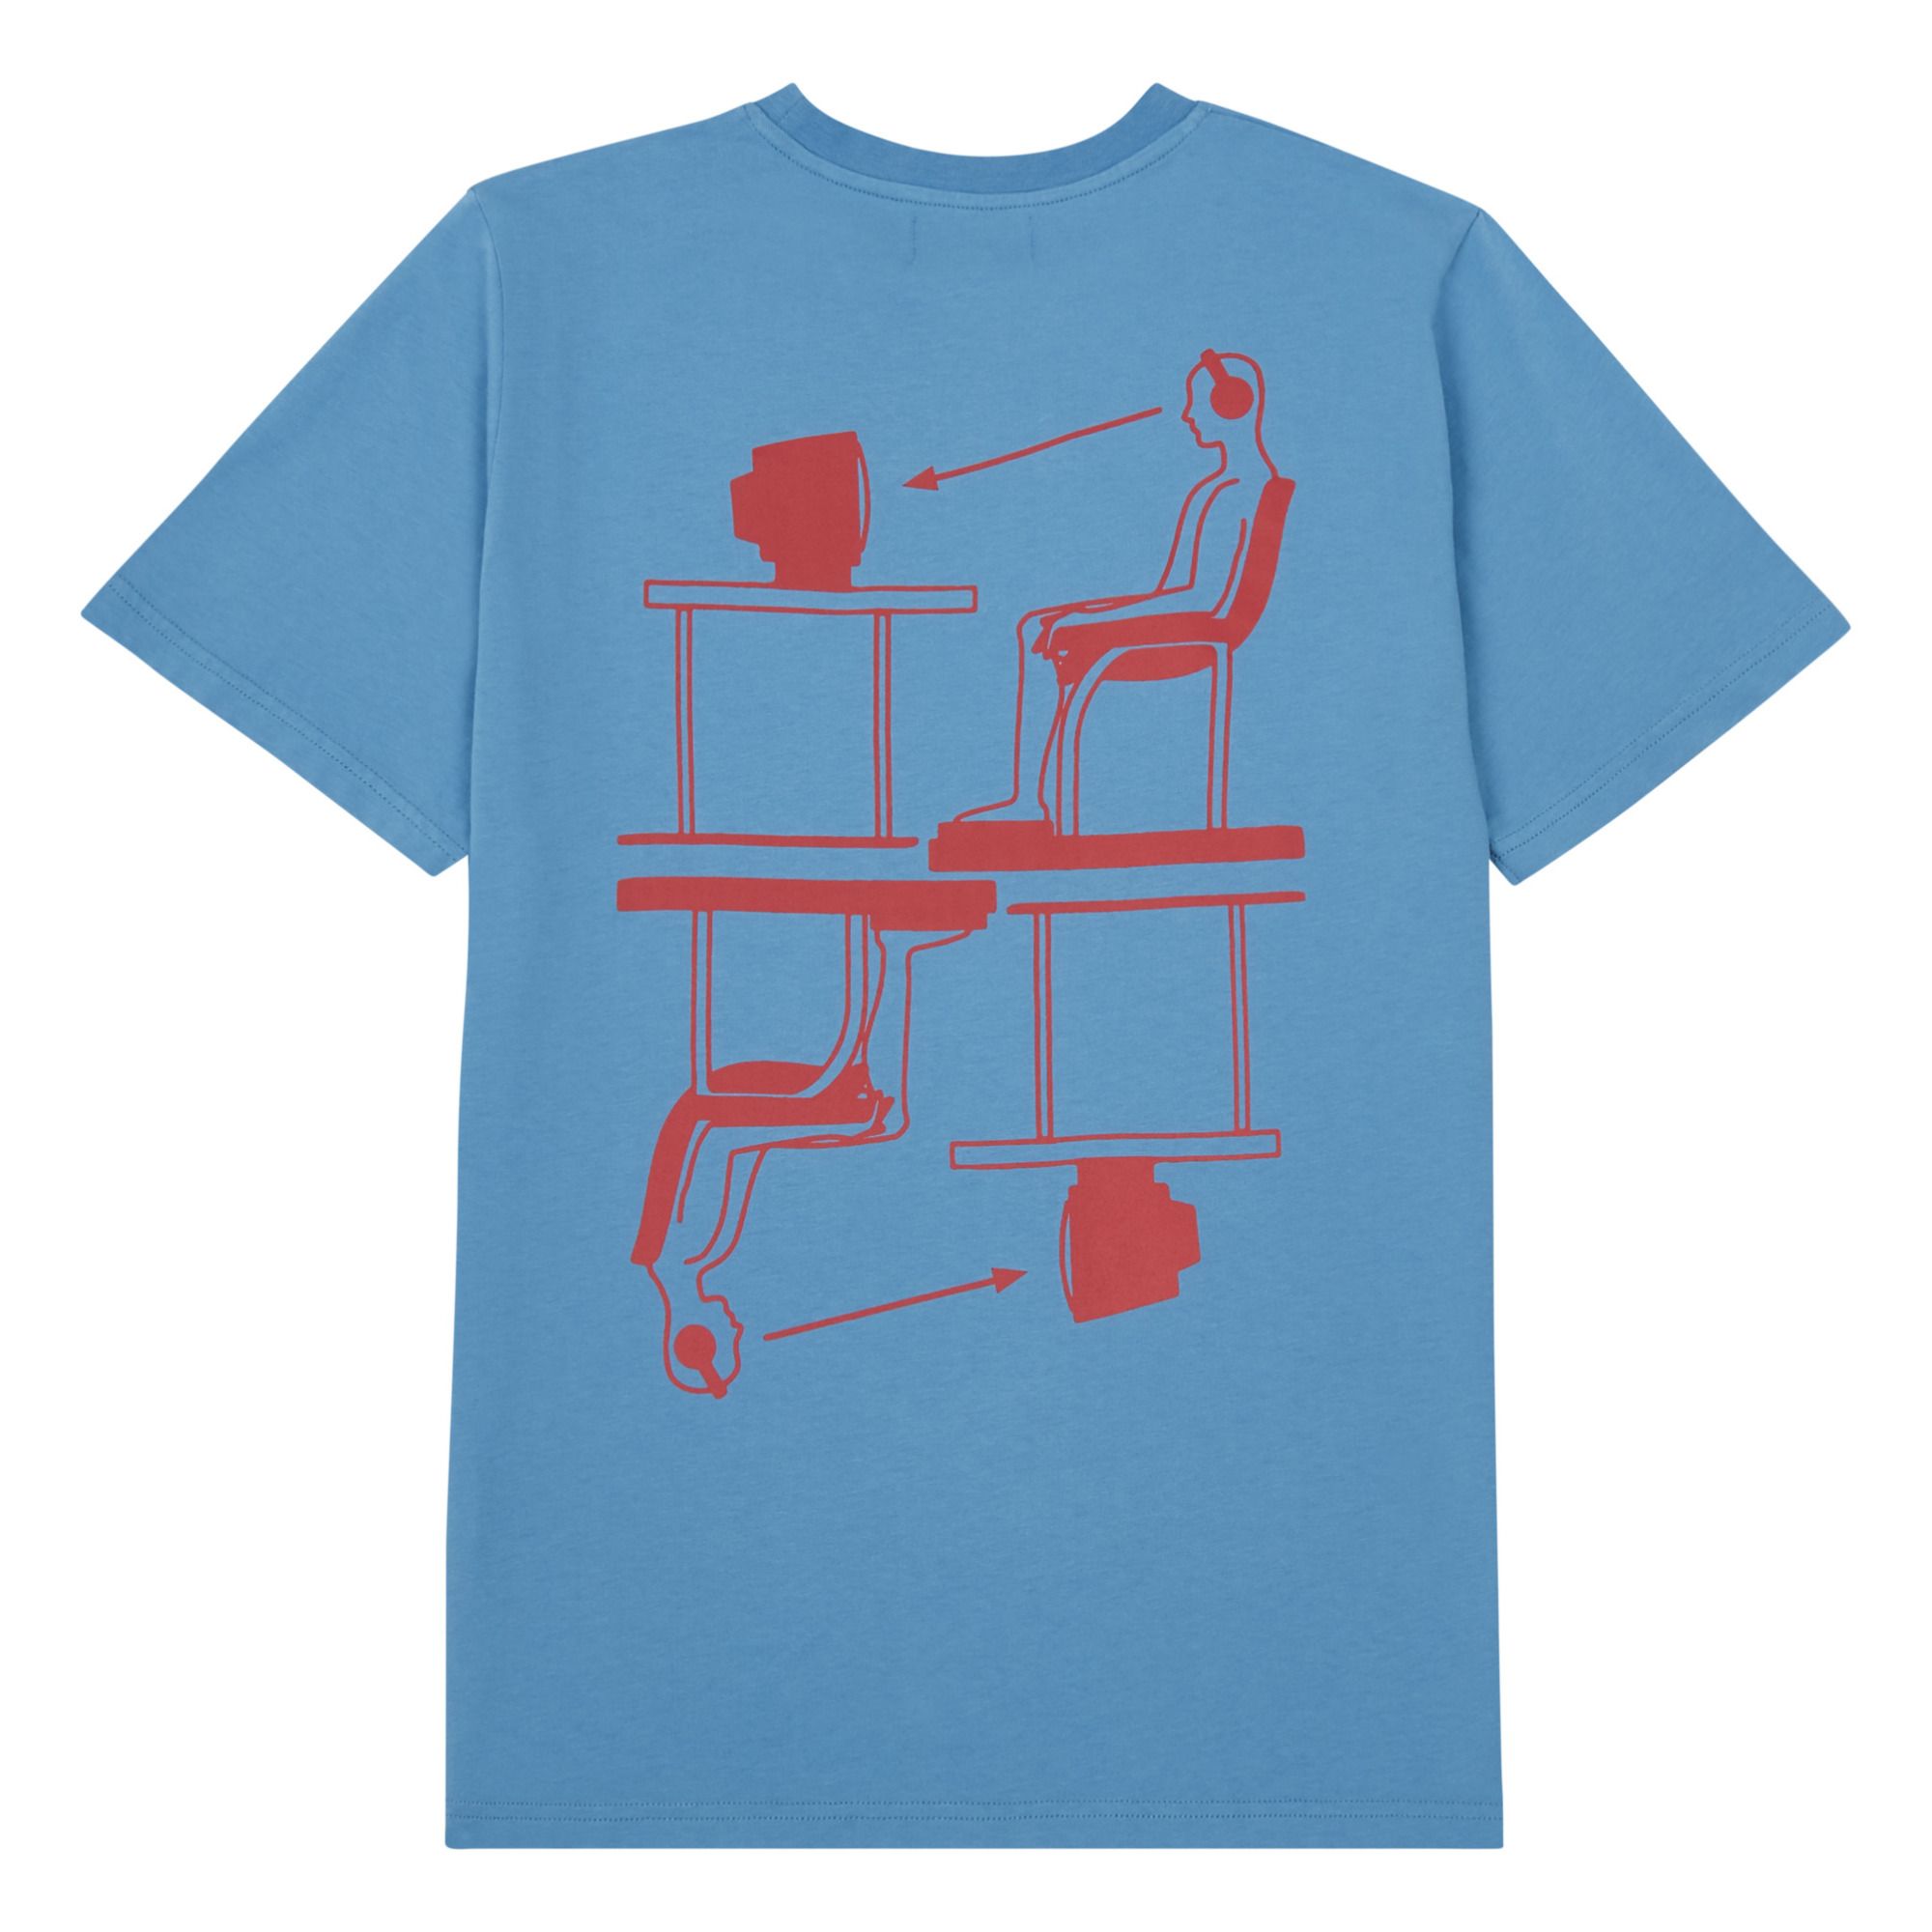 Avnier - T-shirt Audiovisual Coton Bio - Homme - Bleu ciel